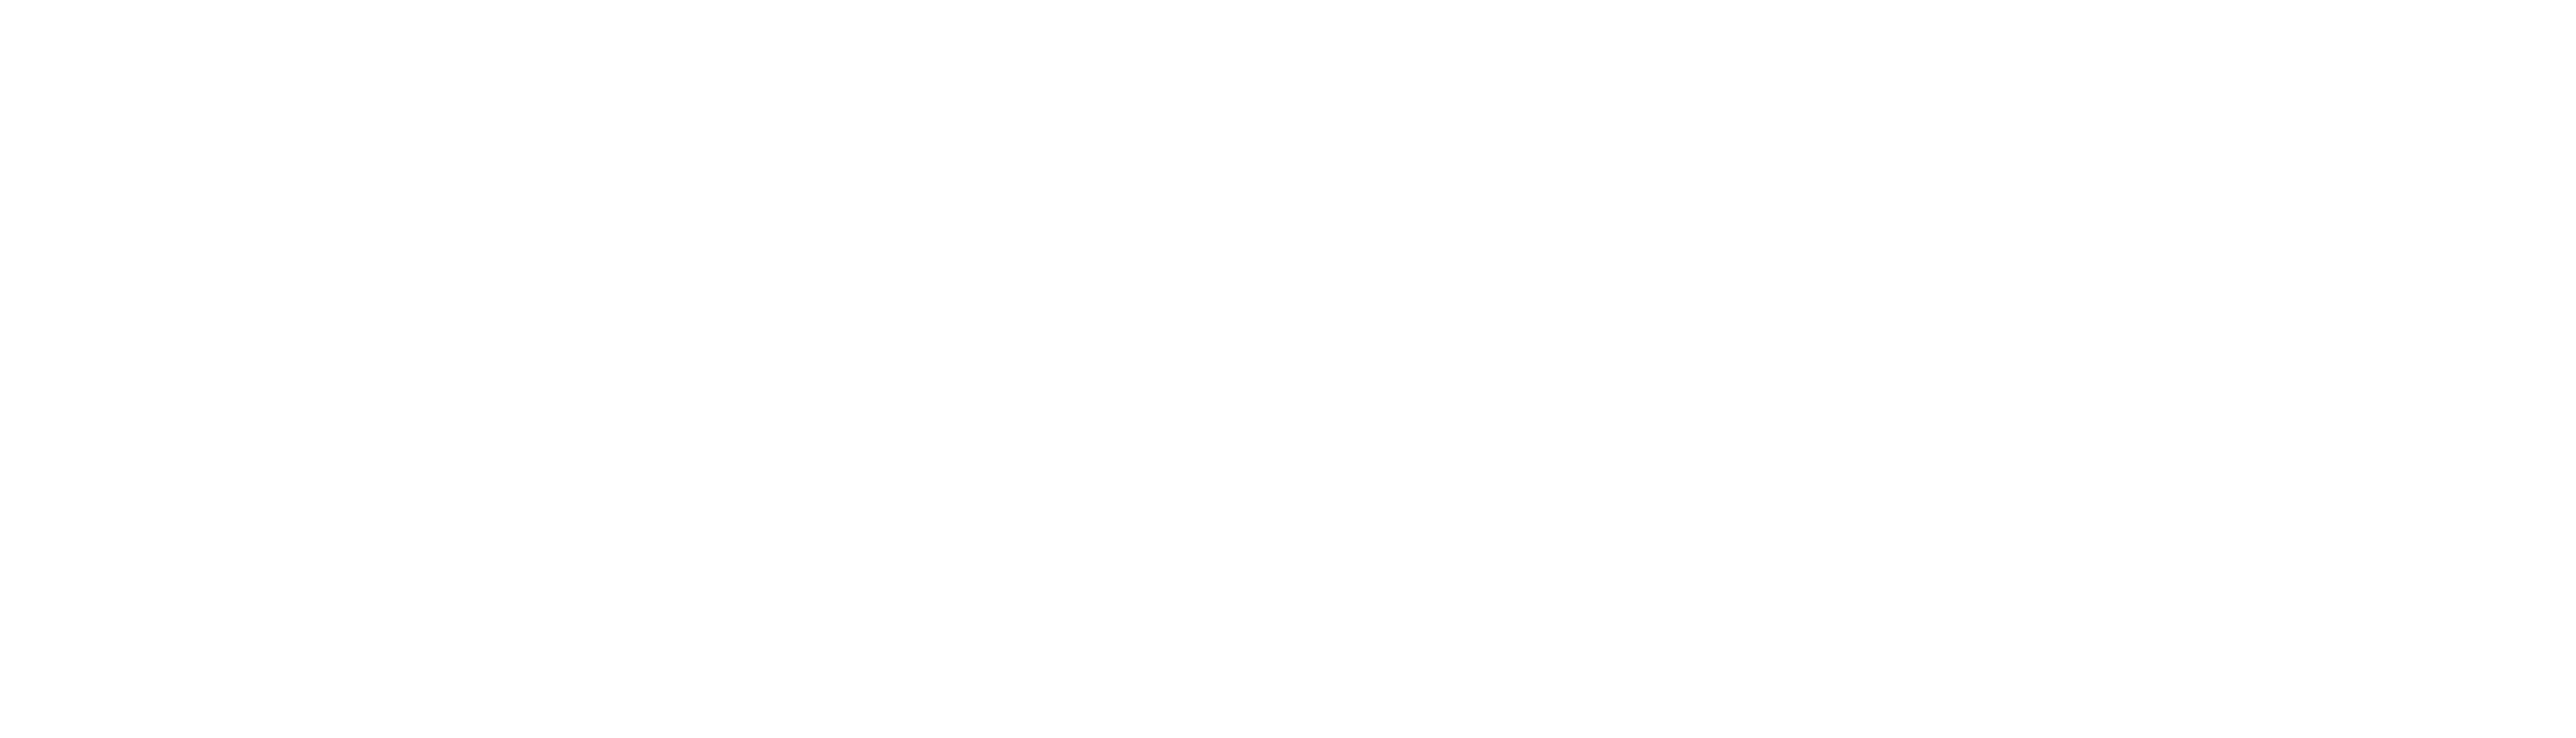 Master Builders SA Logo_CMYK__Tagline_Landscape_Neg (white)